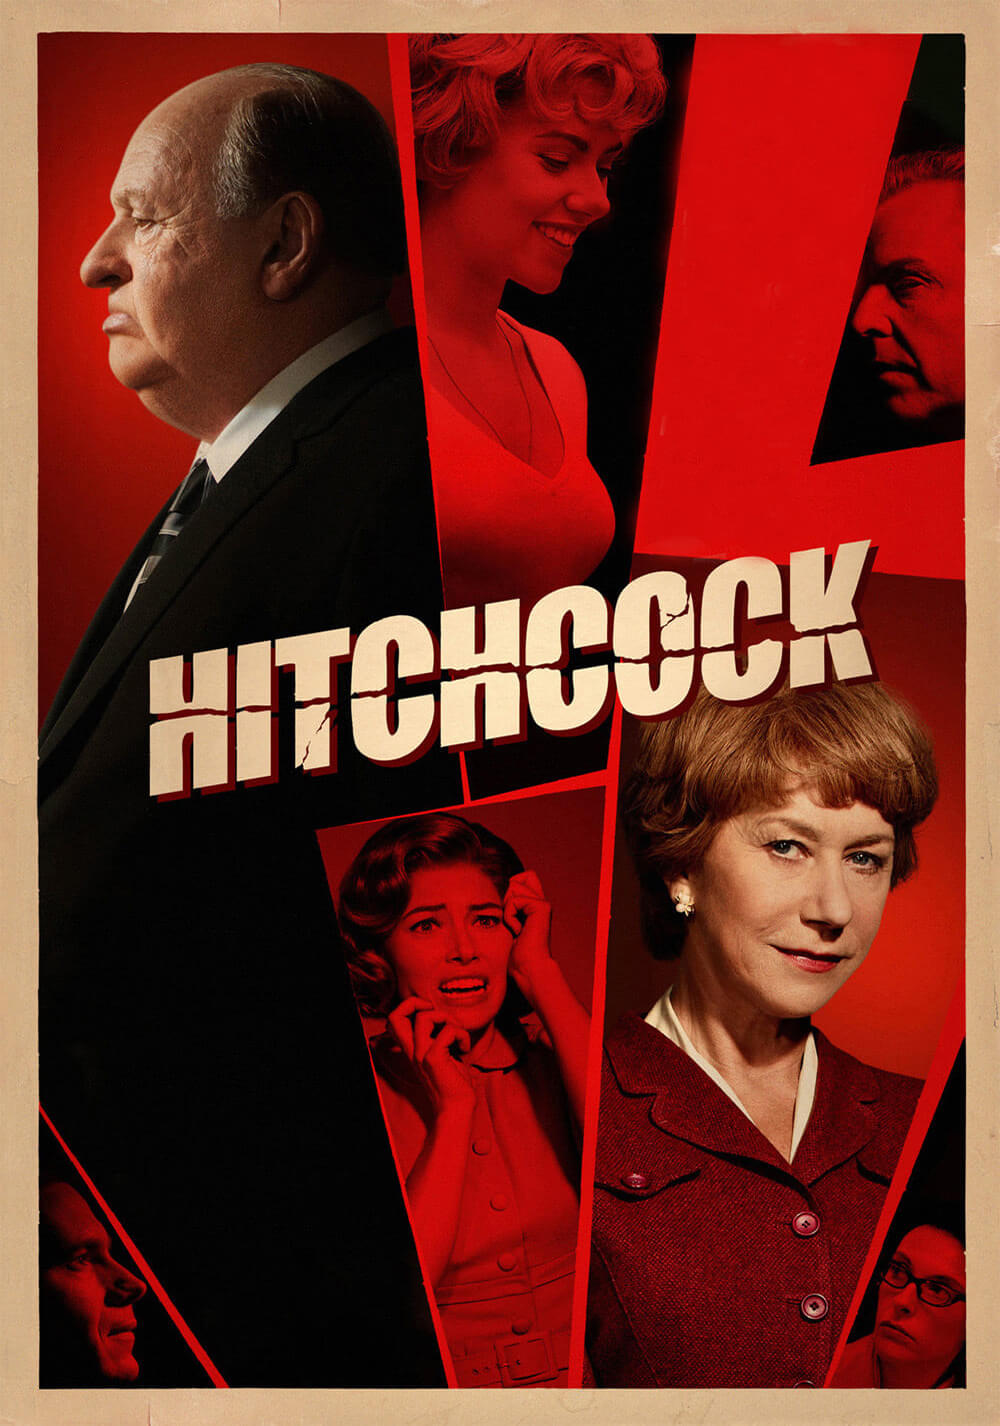 هیچکاک (Hitchcock)